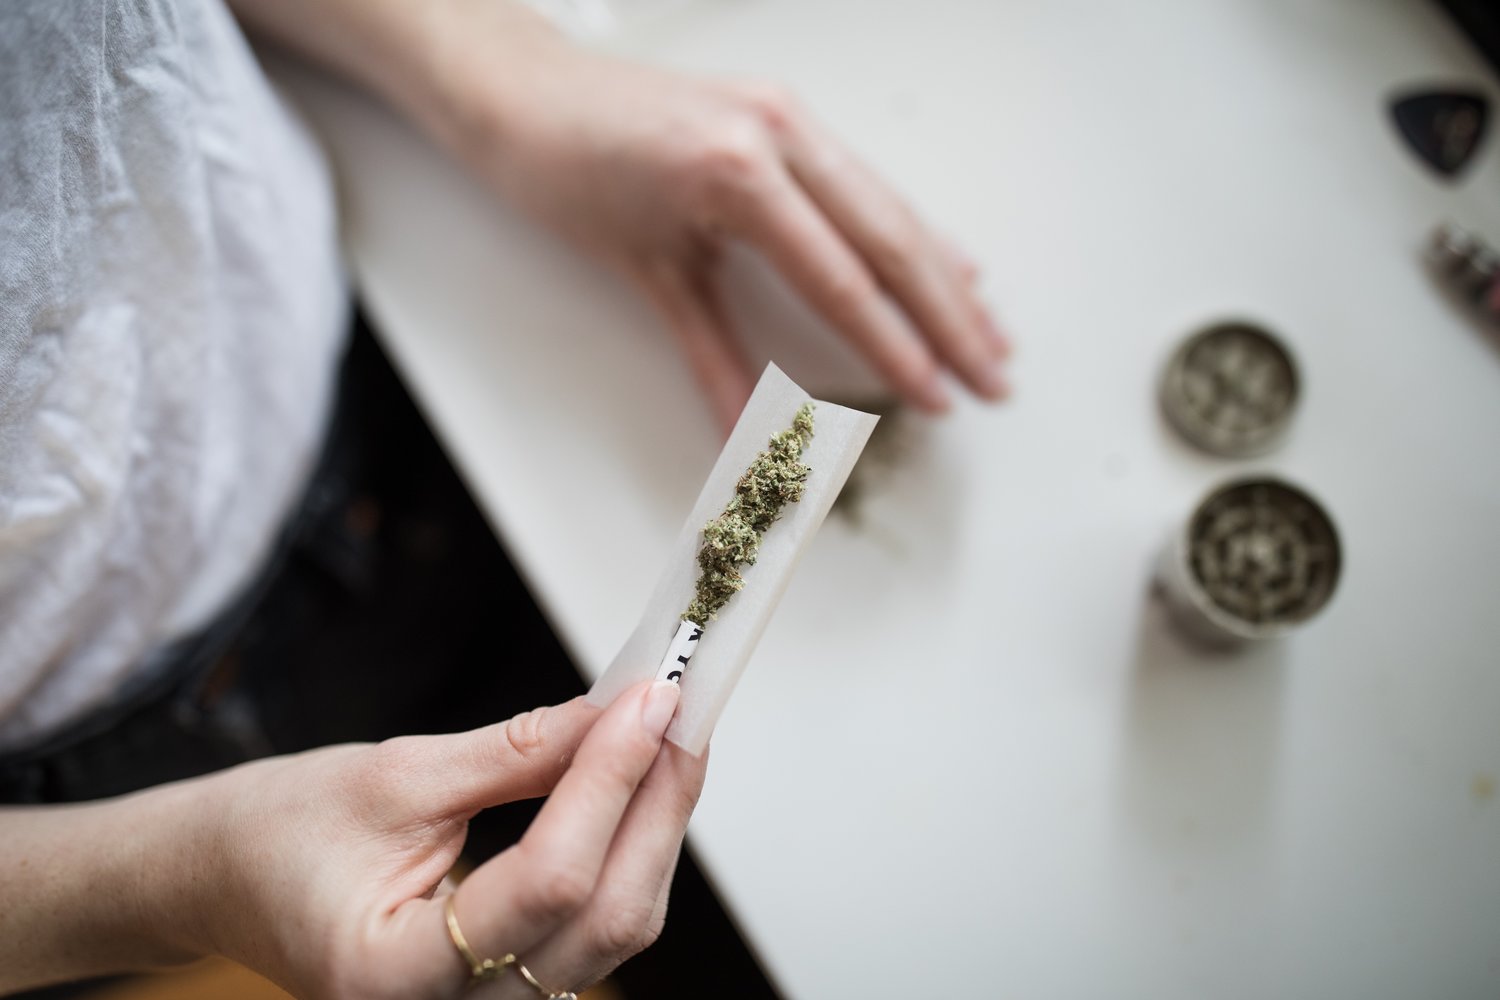 Woman rolls a marijuana joint